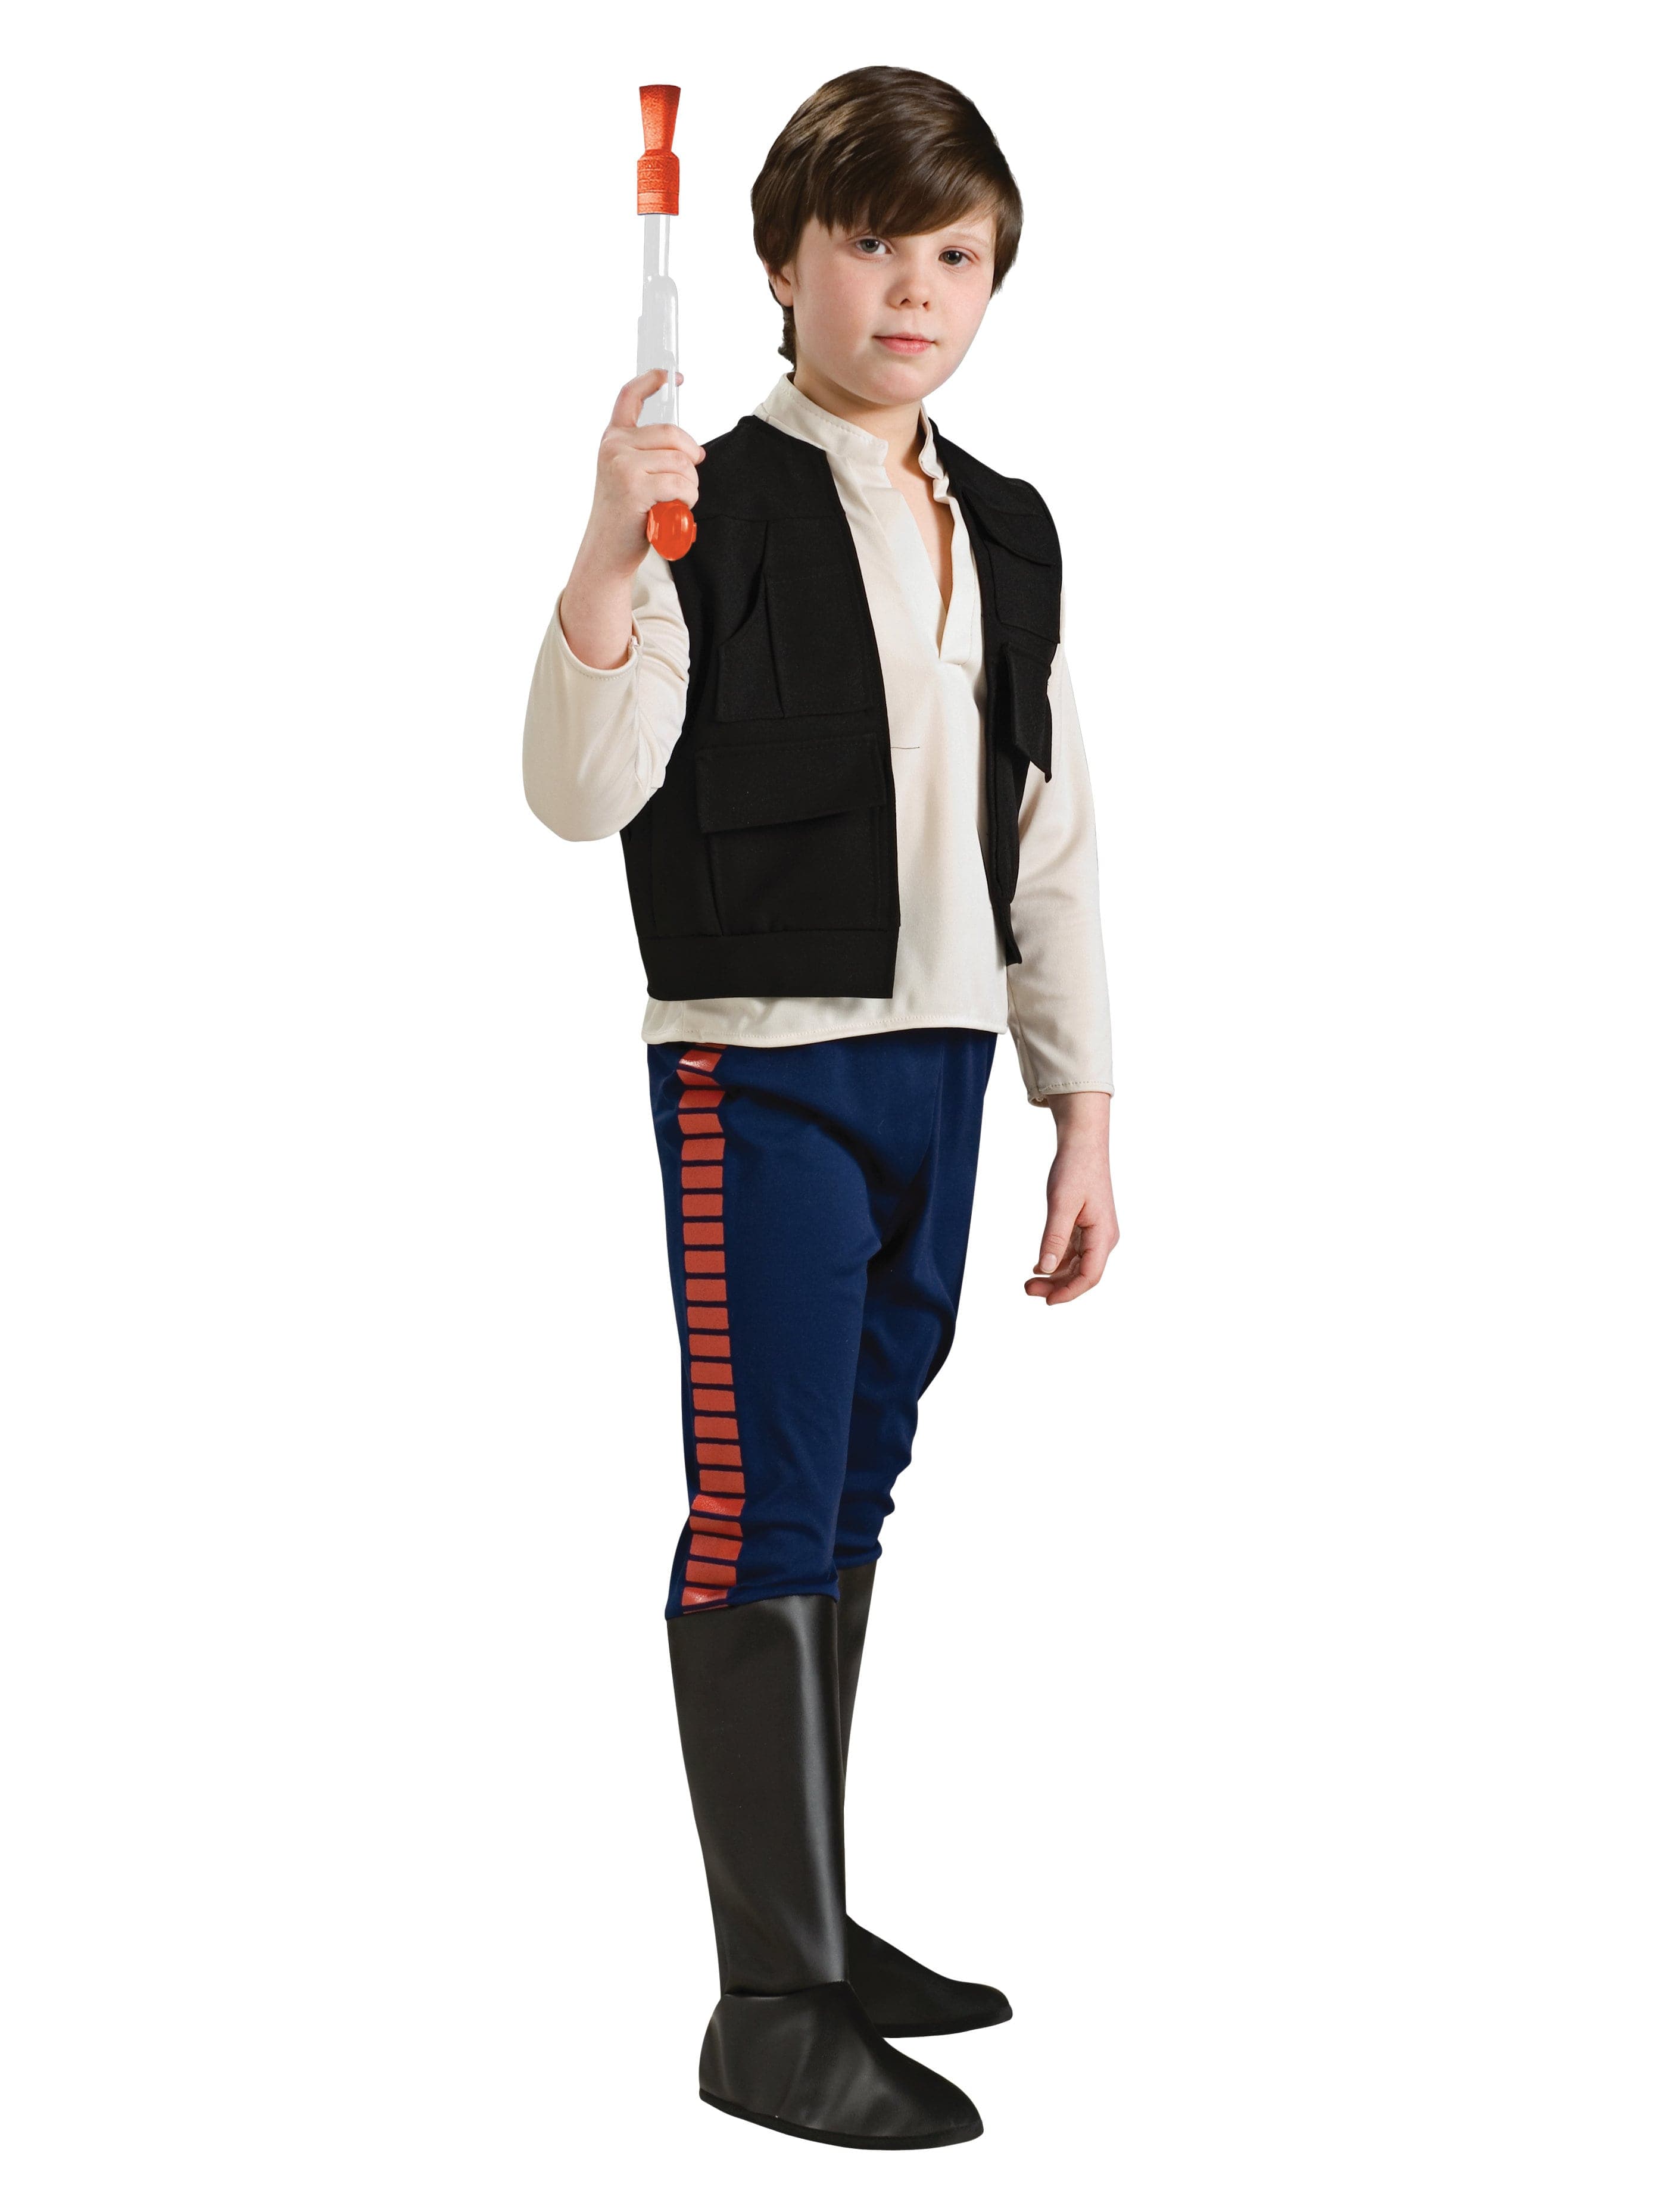 Kids Classic Star Wars Han Solo Deluxe Costume - costumes.com